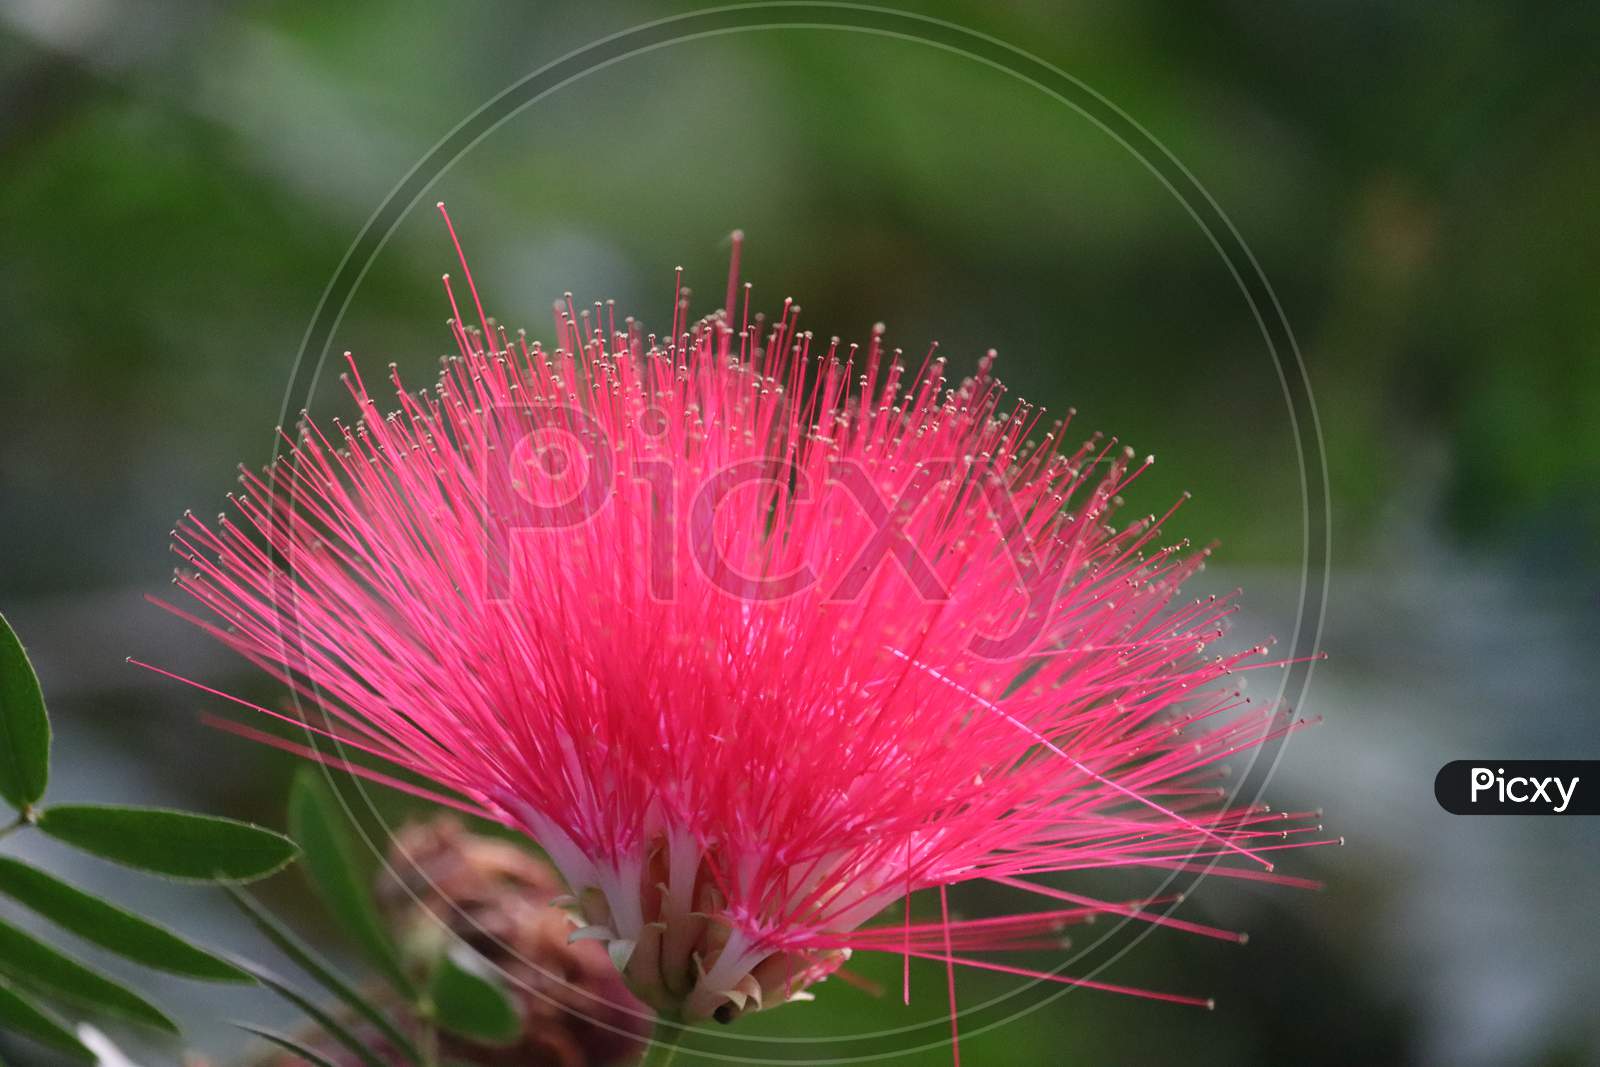 Mimosa Tree Blossom Or Powderpuff Bloom , Calliandra Surinamensis, Mimosaceae Family, Pink Powder Puff, Surinamese Stickpea, Surinam Powderpuff